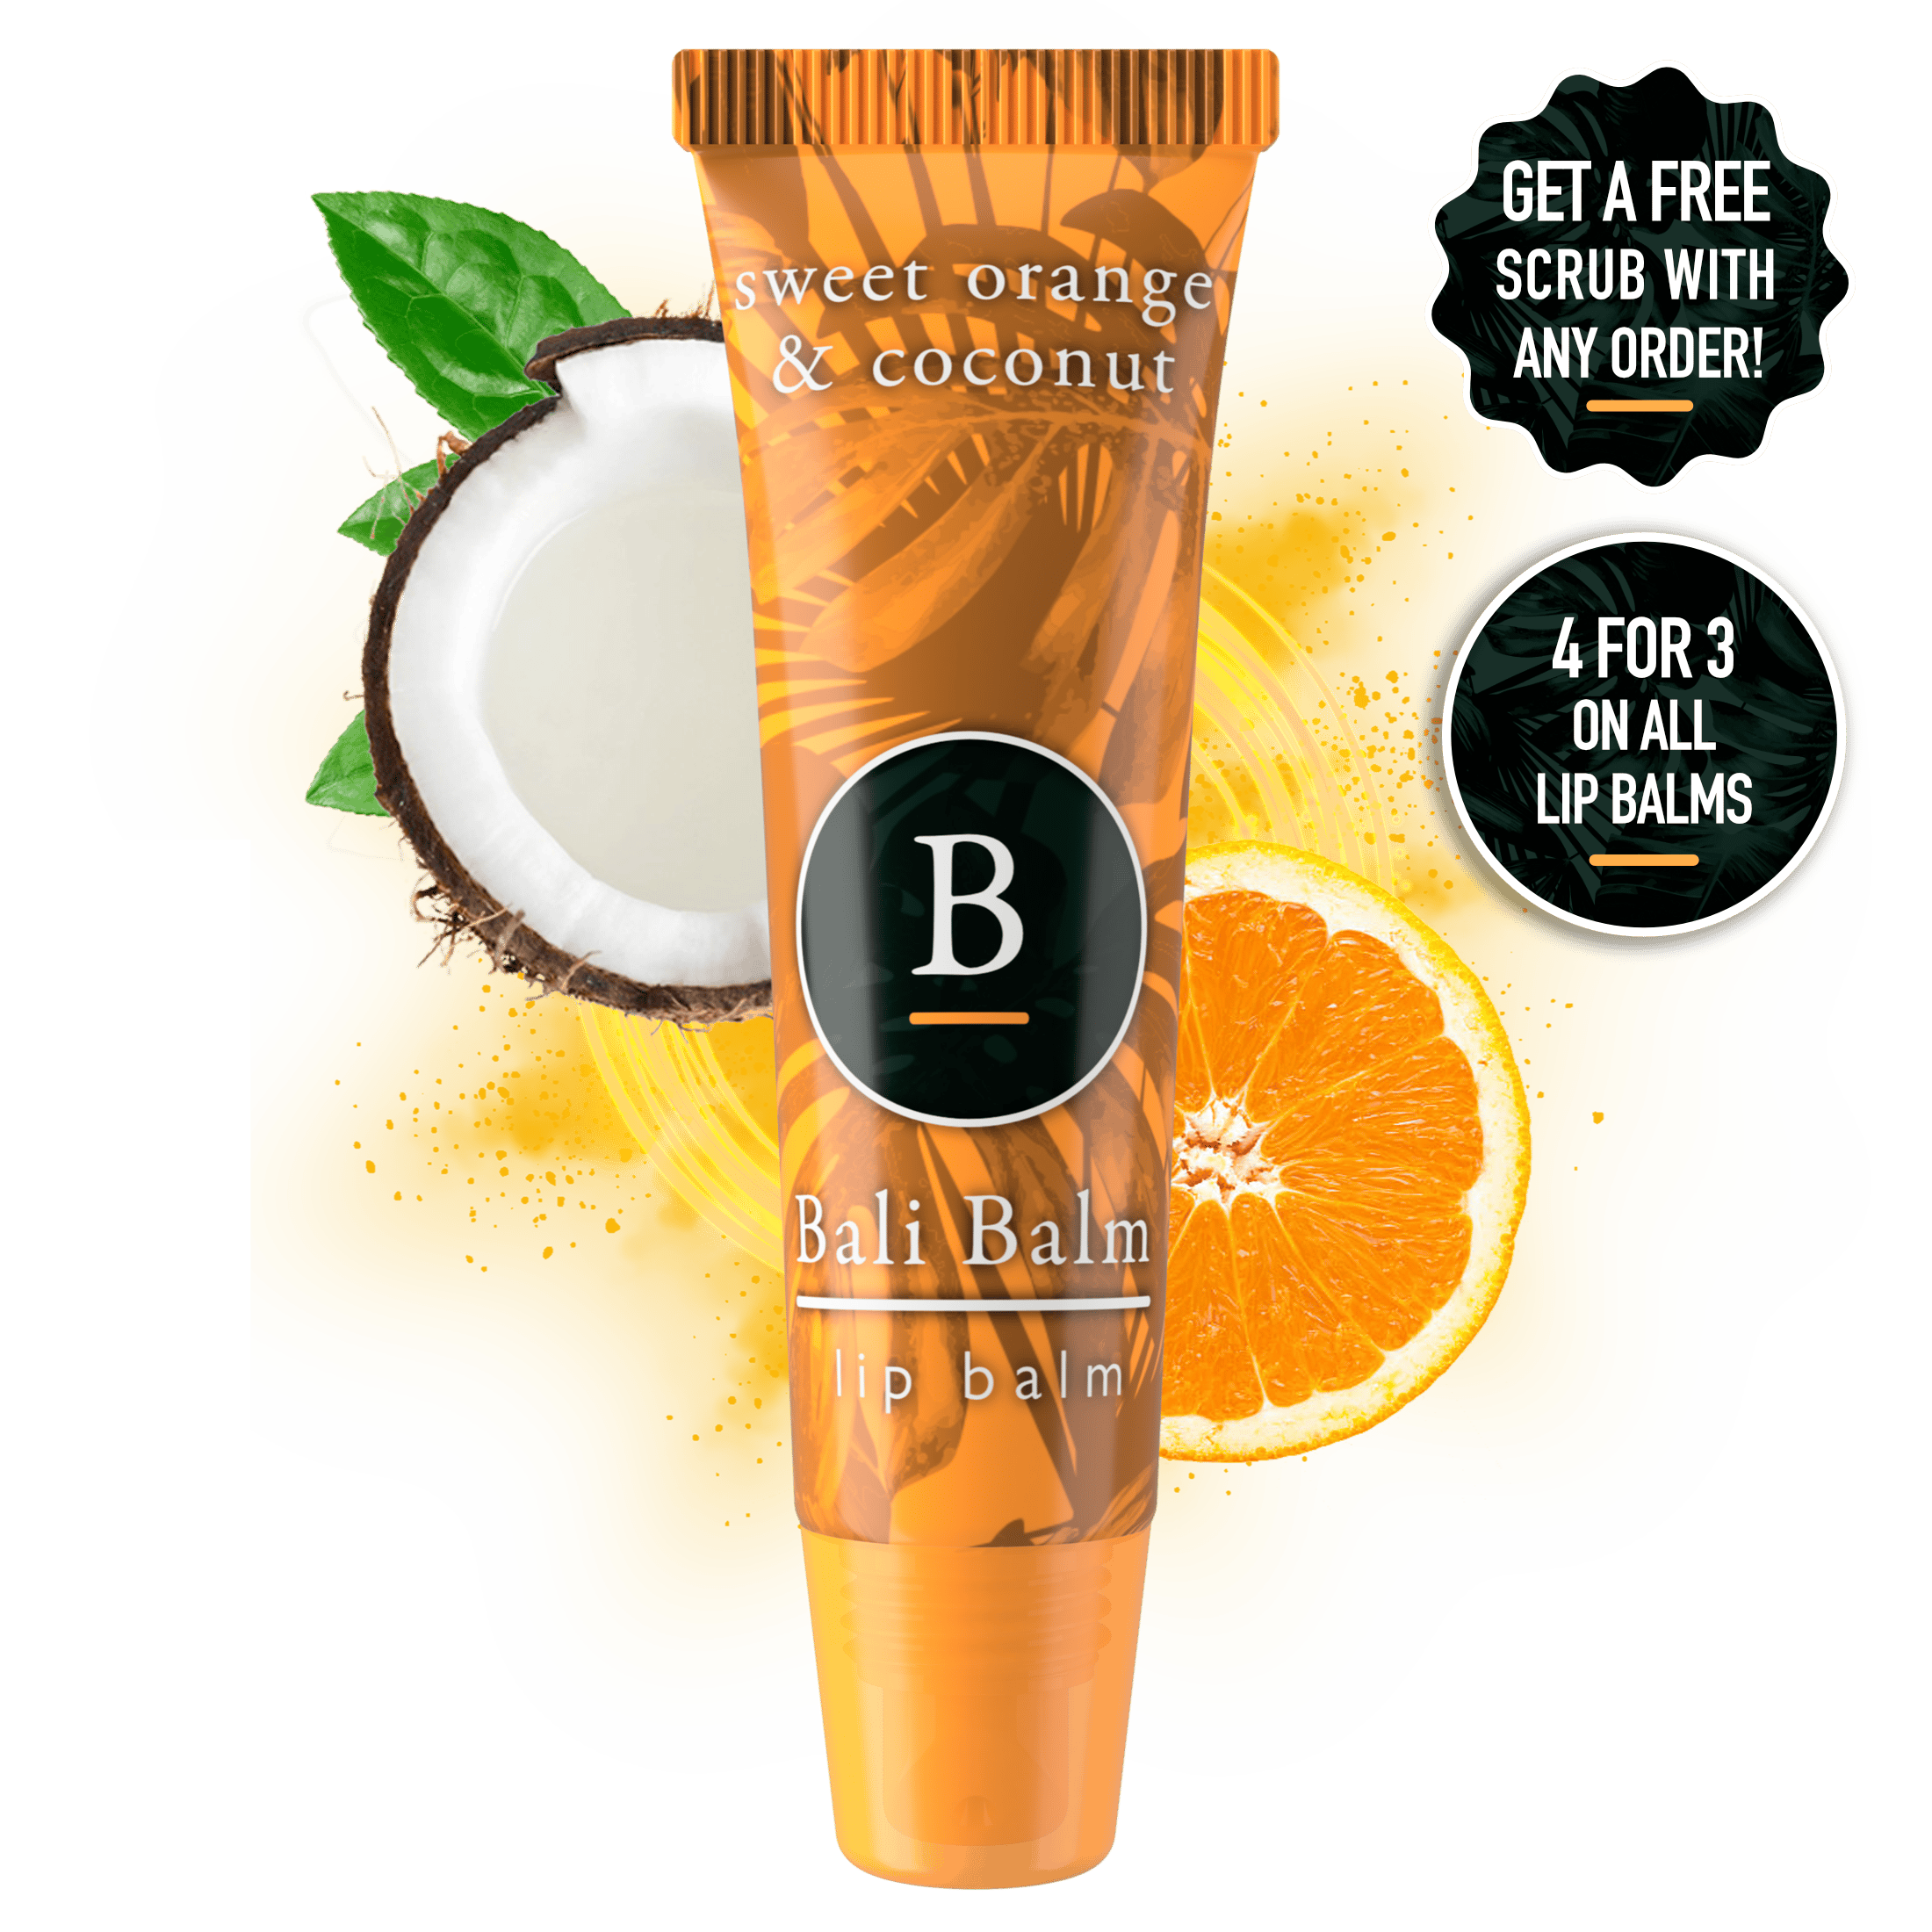 Sweet Orange & Coconut Lip Balm online